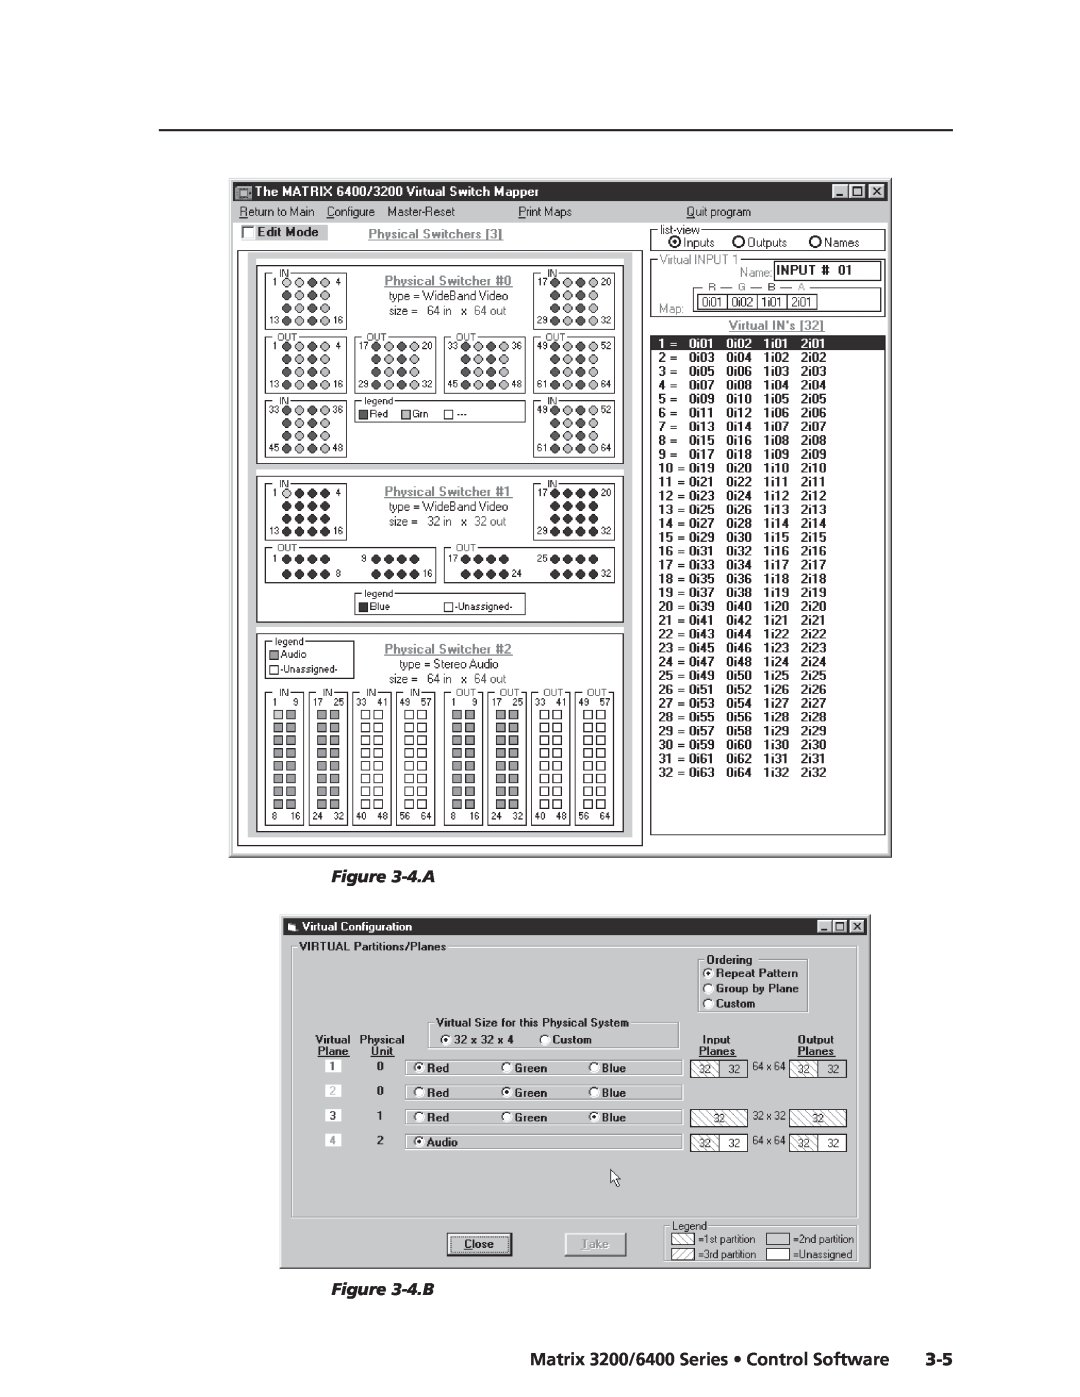 Extron electronic 3200s manual 4.A -4.B, Matrix 3200/6400 Series Control Software 